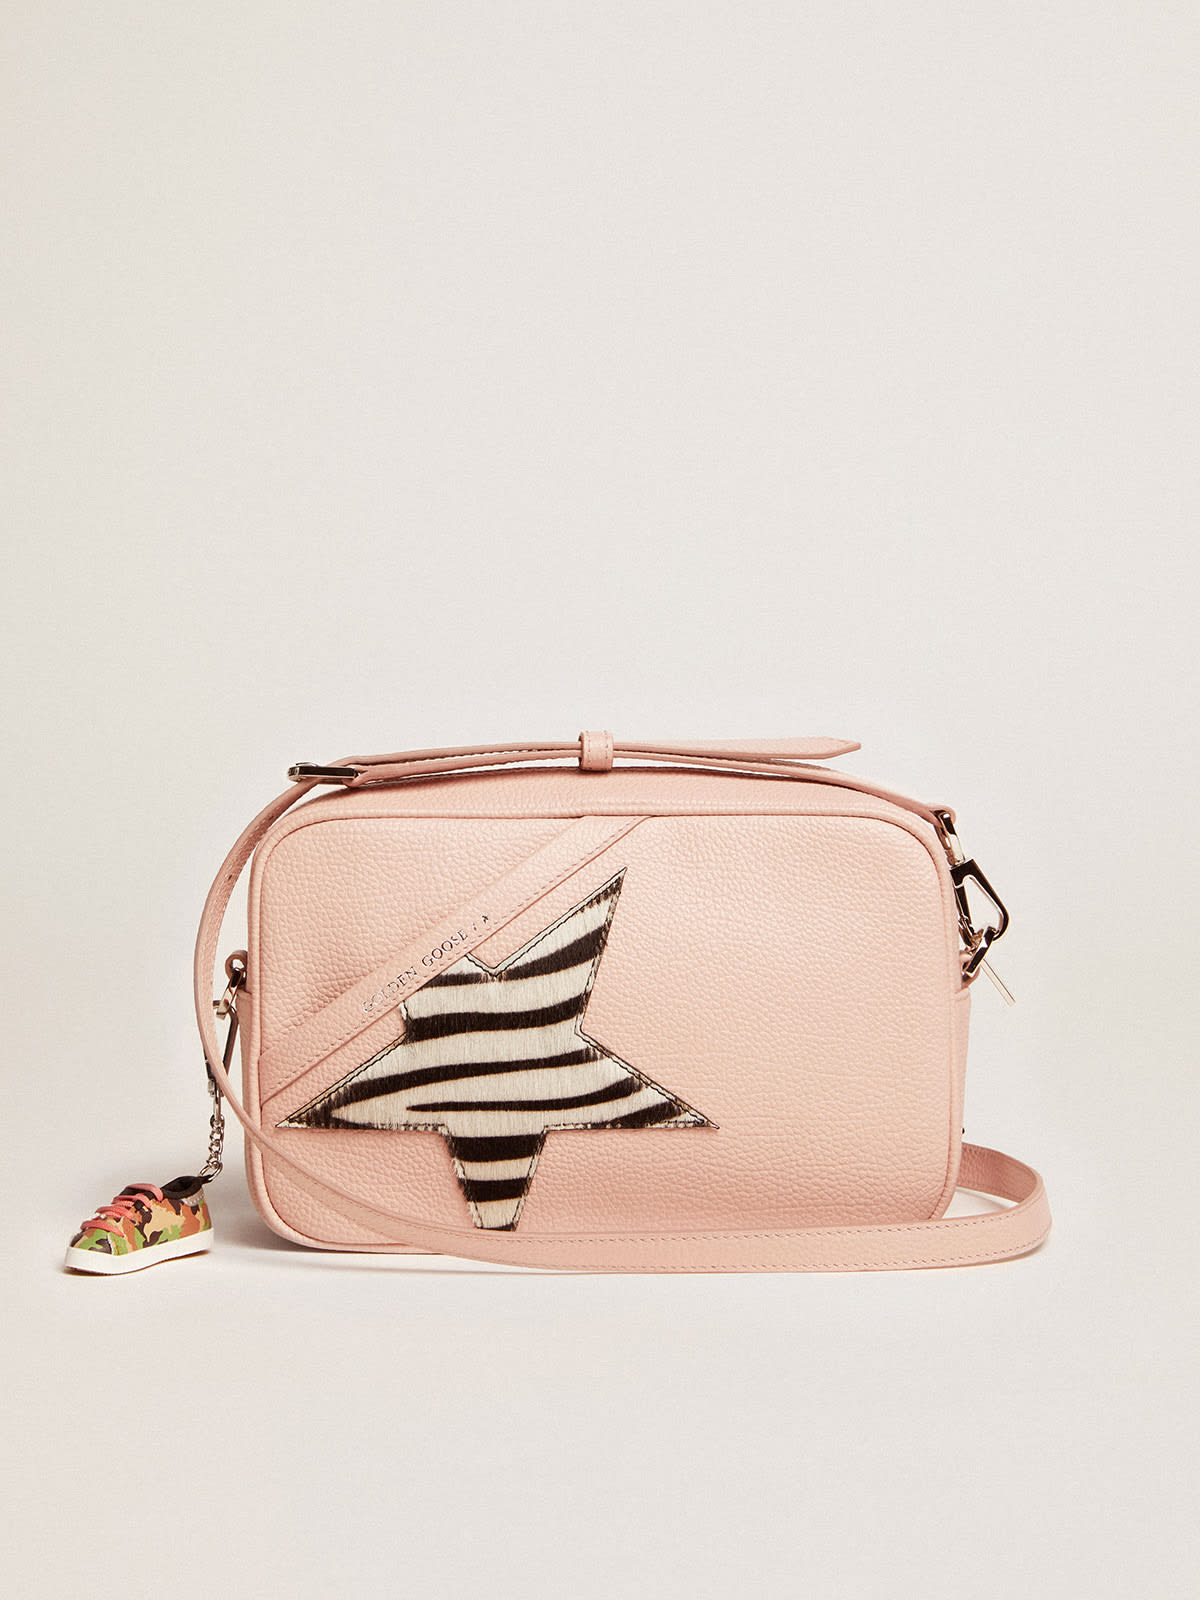 Golden Goose - Star Bag in pink leather with zebra-print pony skin star in 